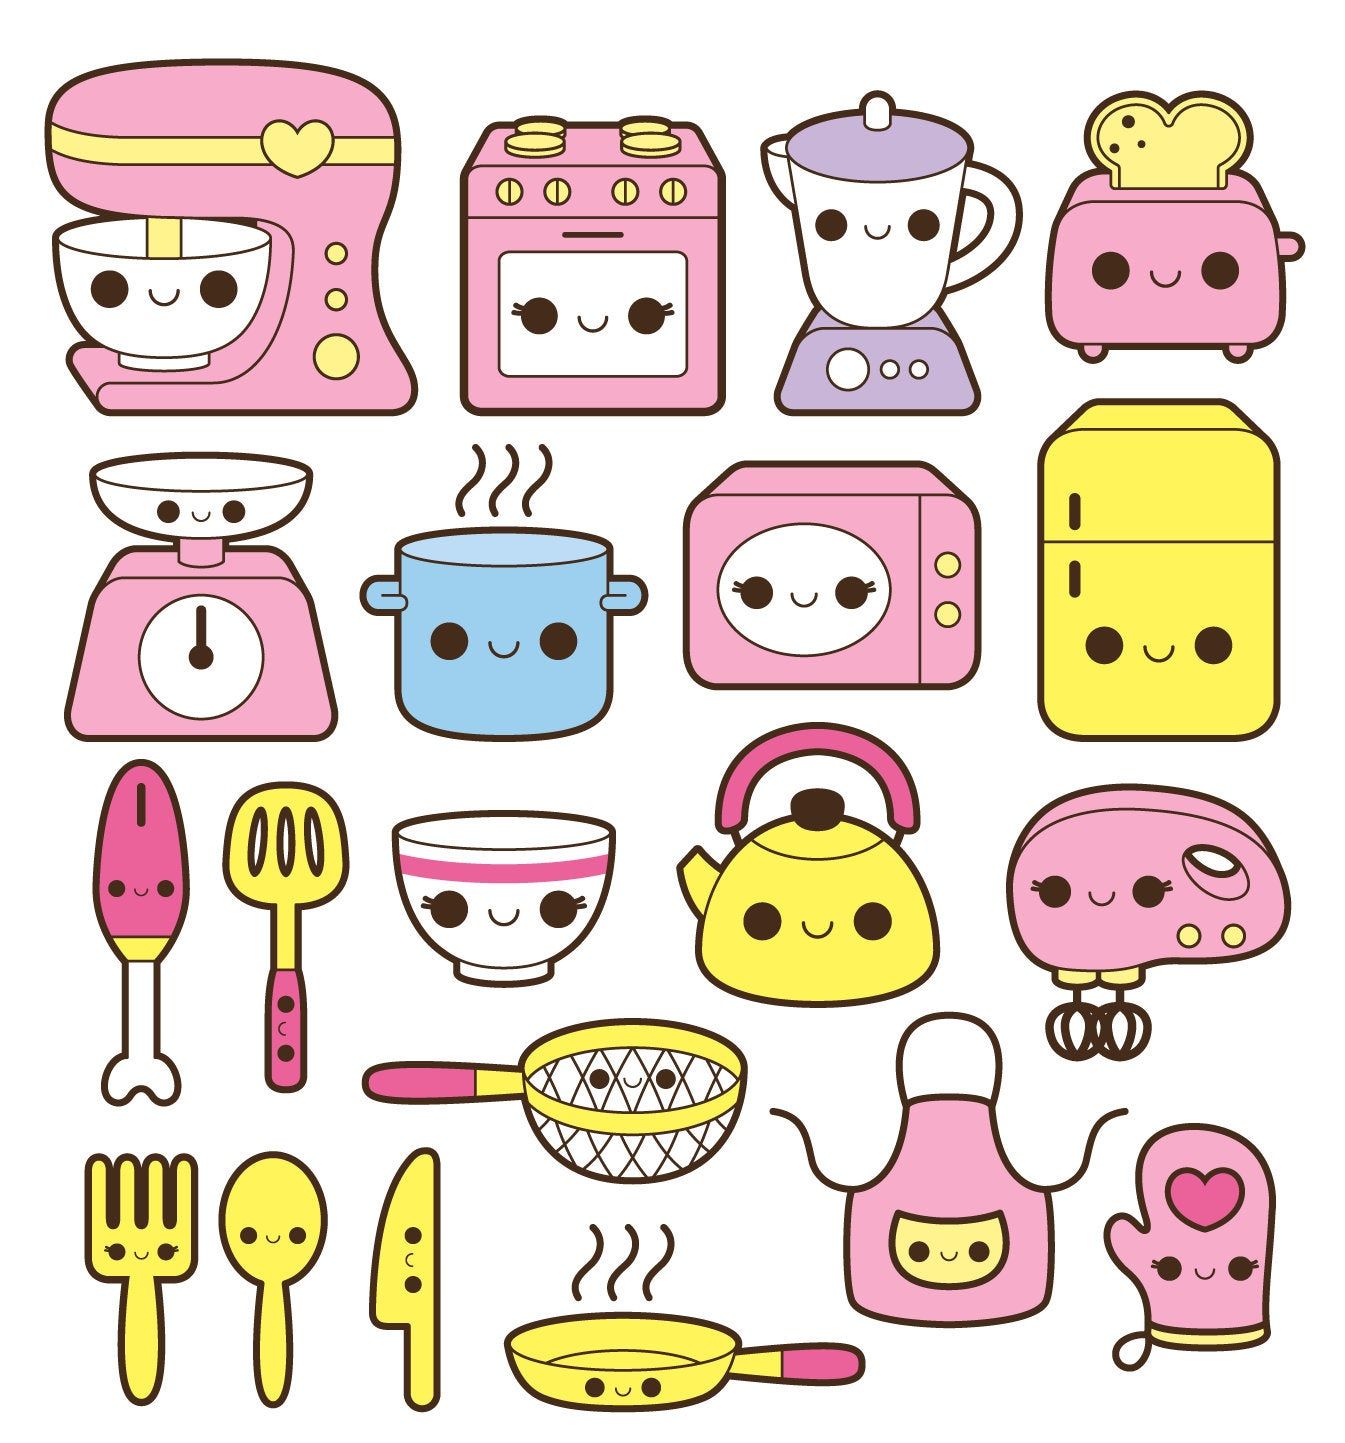 Kawaii kitchen clipart, kawaii cooking clip art, cute kitchen clipart, kawaii baking clipart, cooking tools, kitchen accessories, cute mixer. Cute food drawings, Kawaii cooking, Kawaii doodles